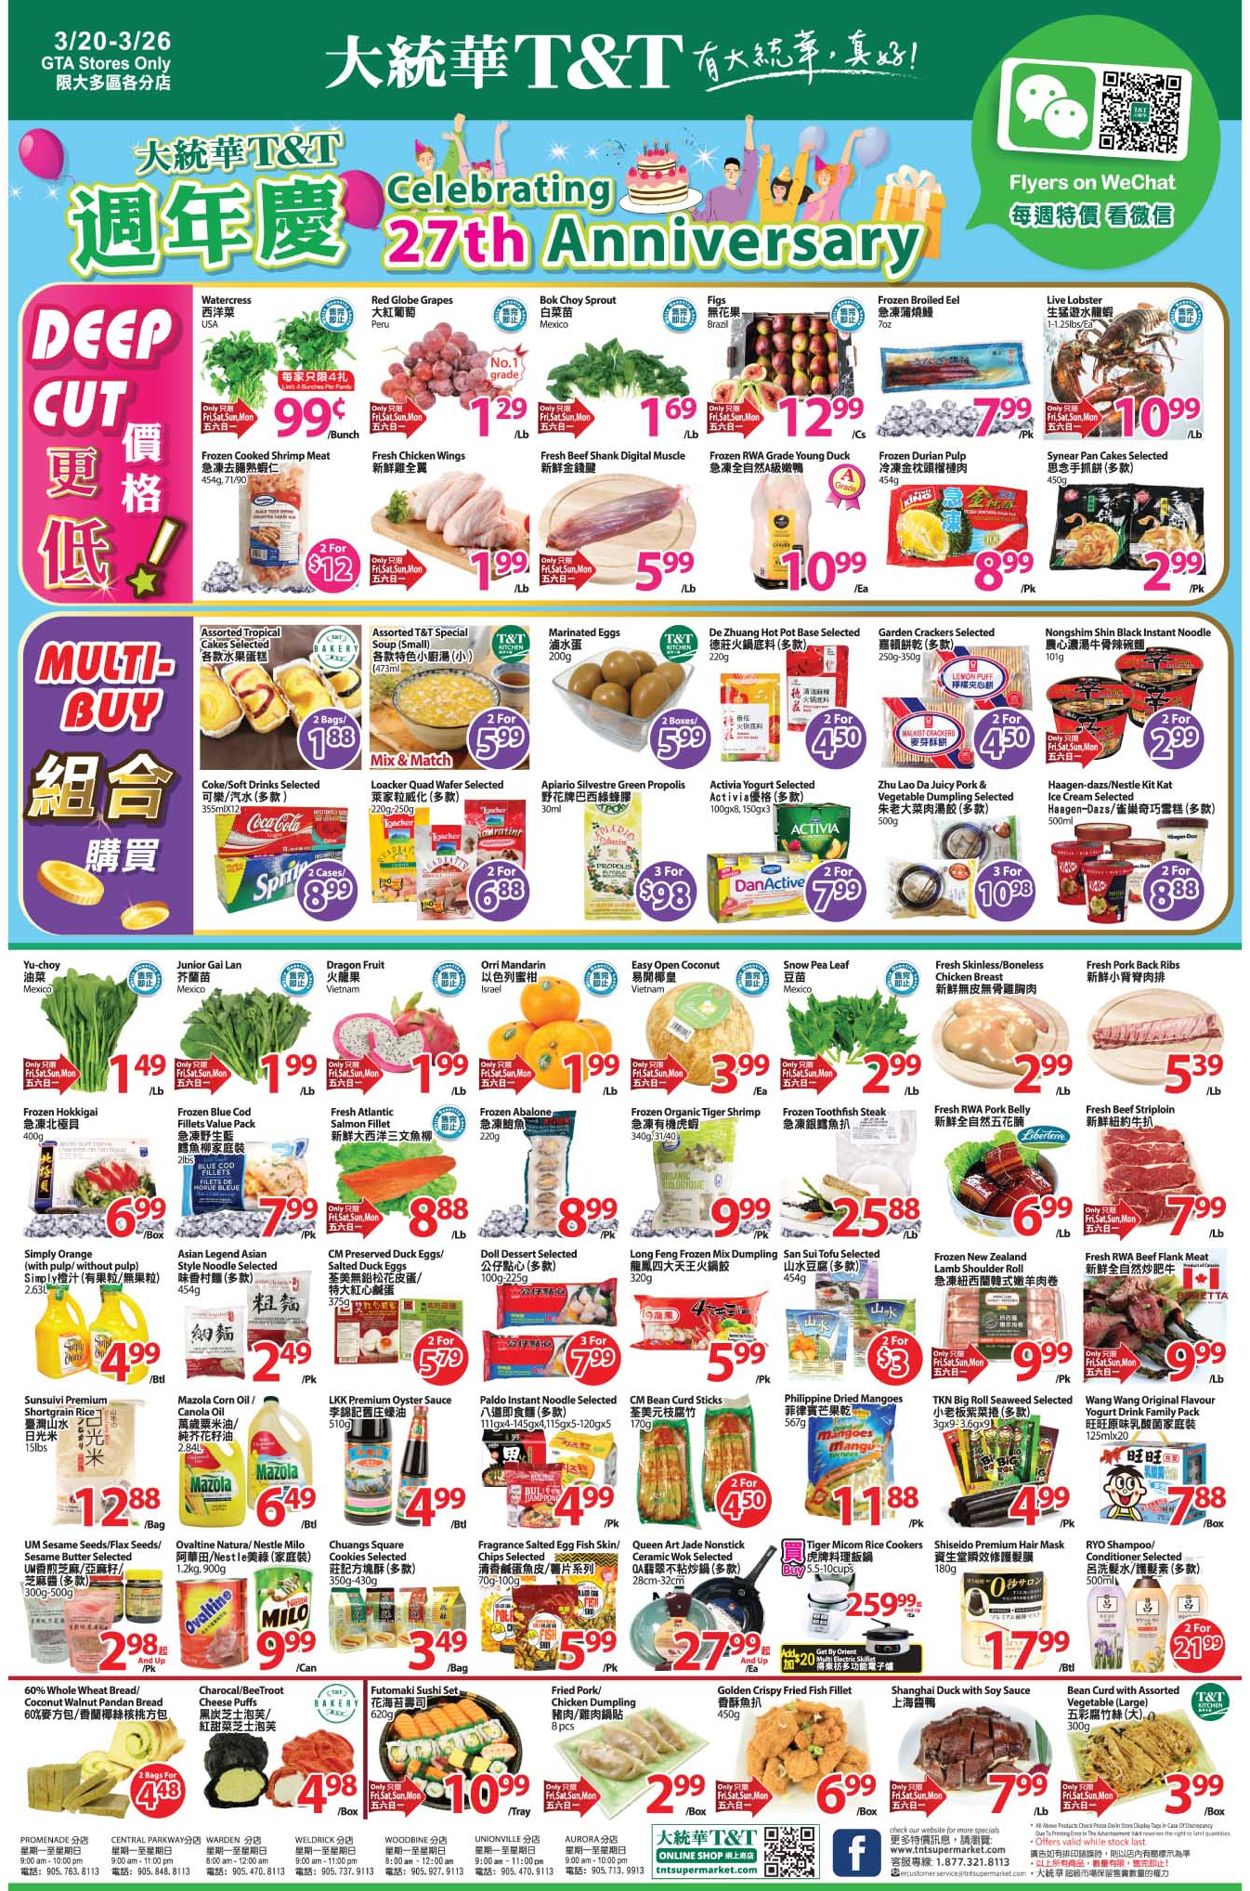 T&T Supermarket Flyer - 03/20-03/26/2020